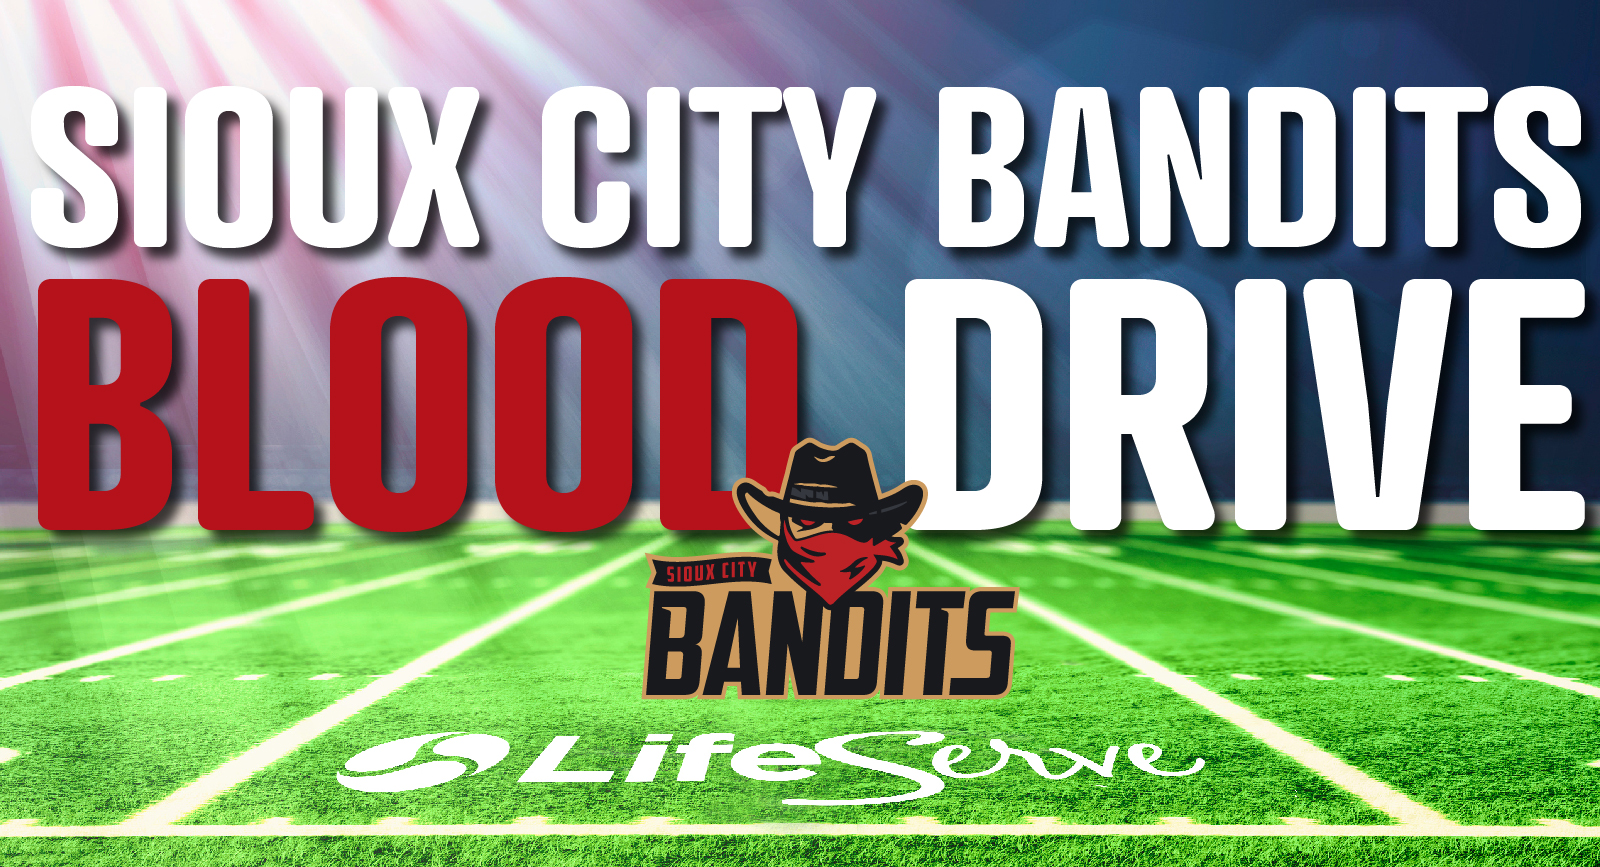 Sioux City Bandits Blood Drive